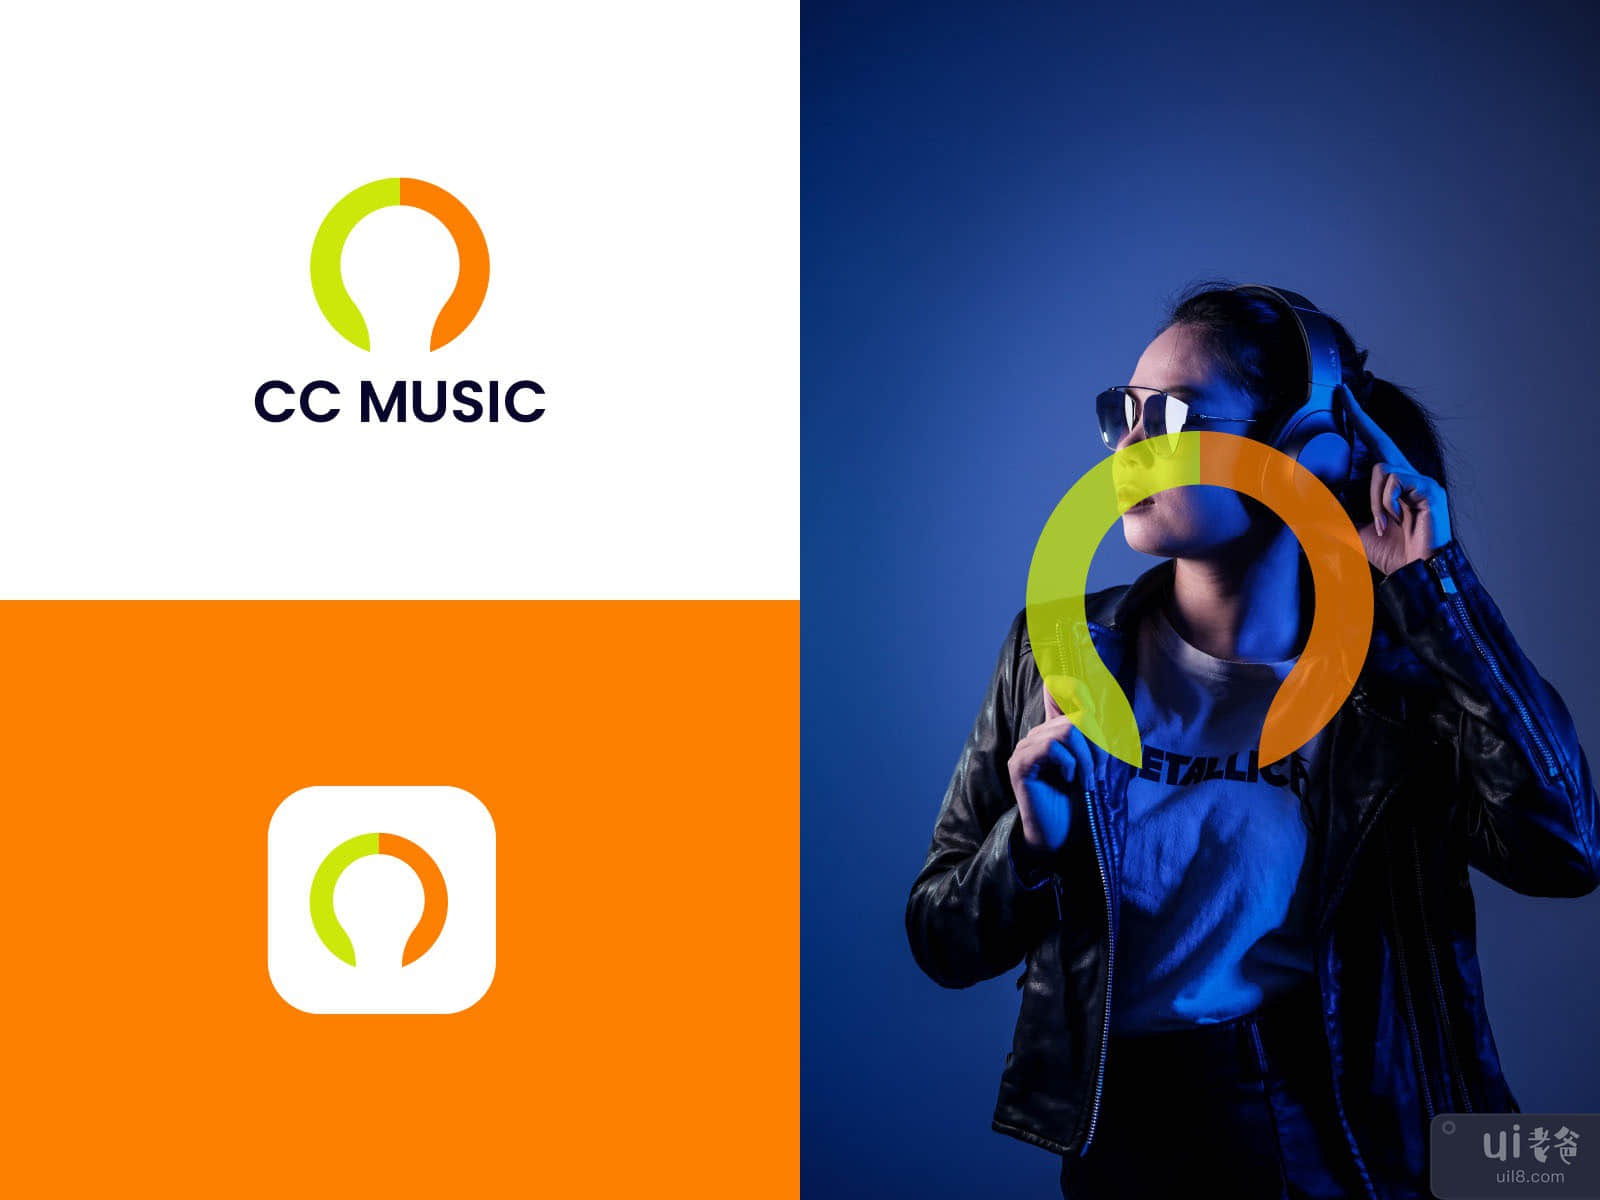 cc music logo